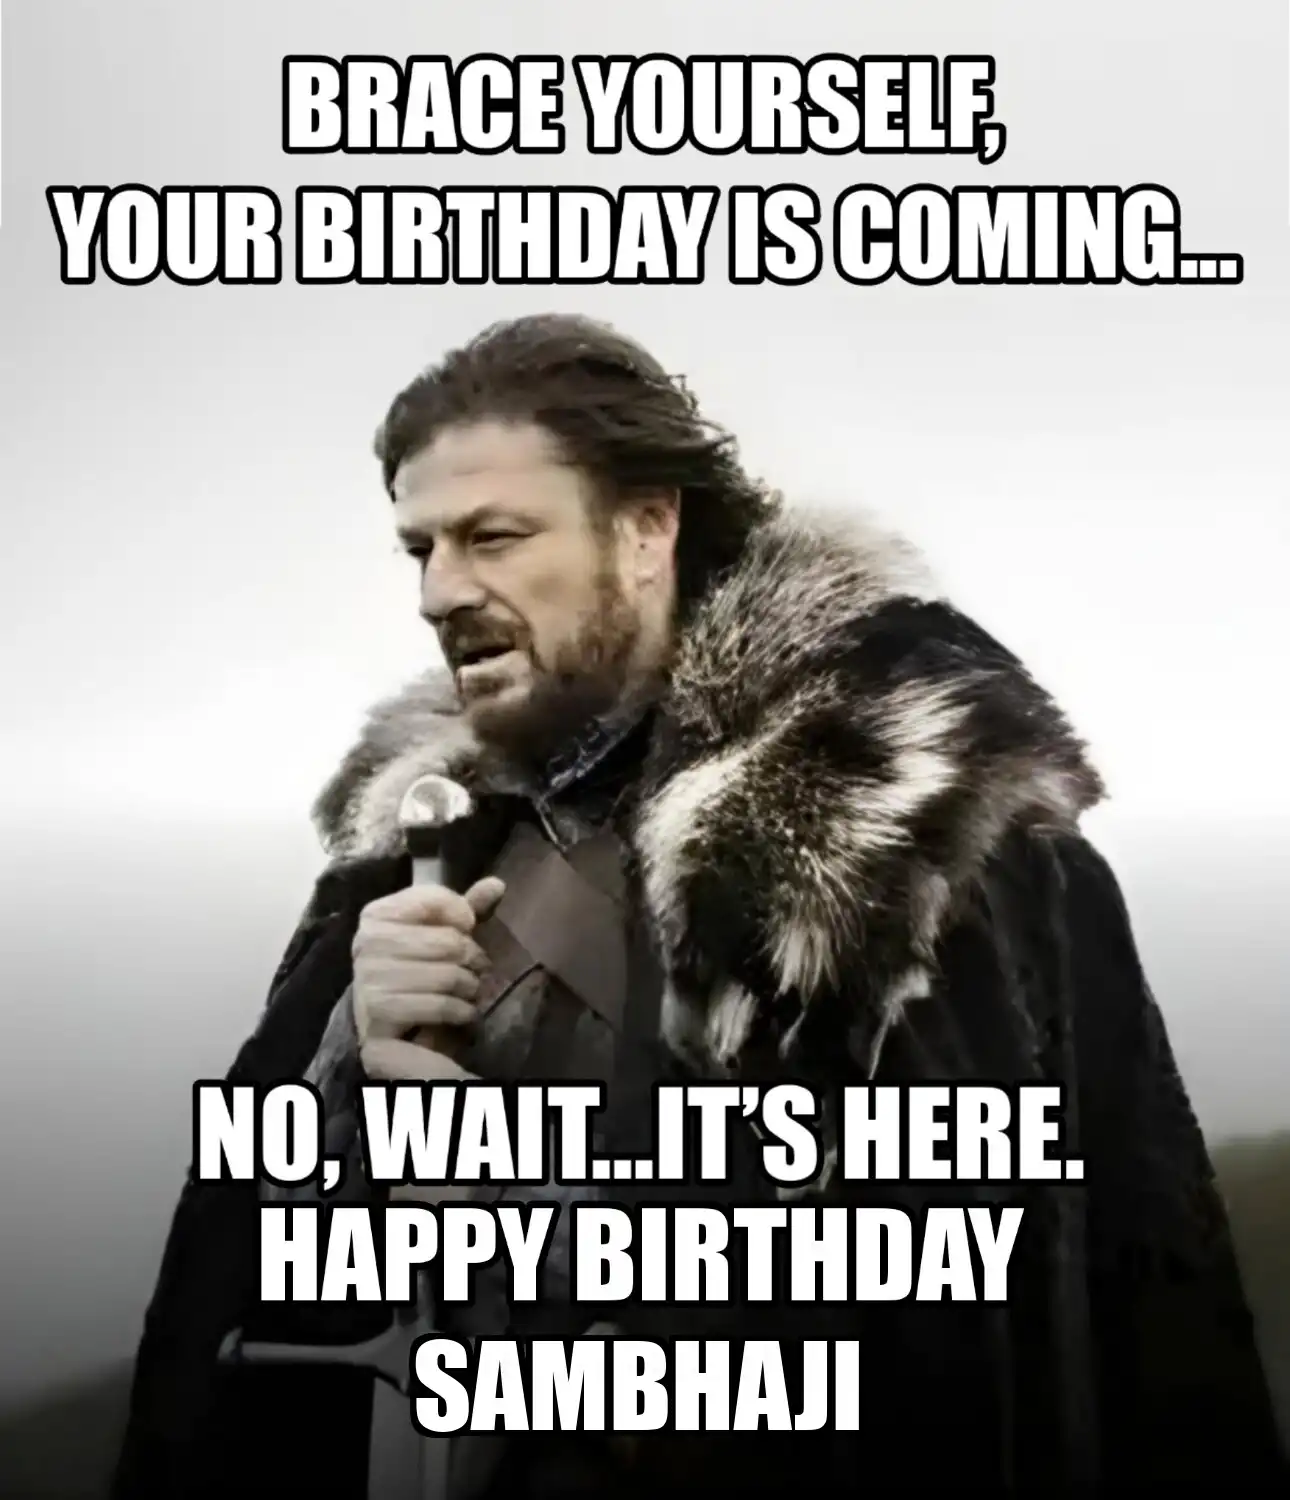 Happy Birthday Sambhaji Brace Yourself Your Birthday Is Coming Meme